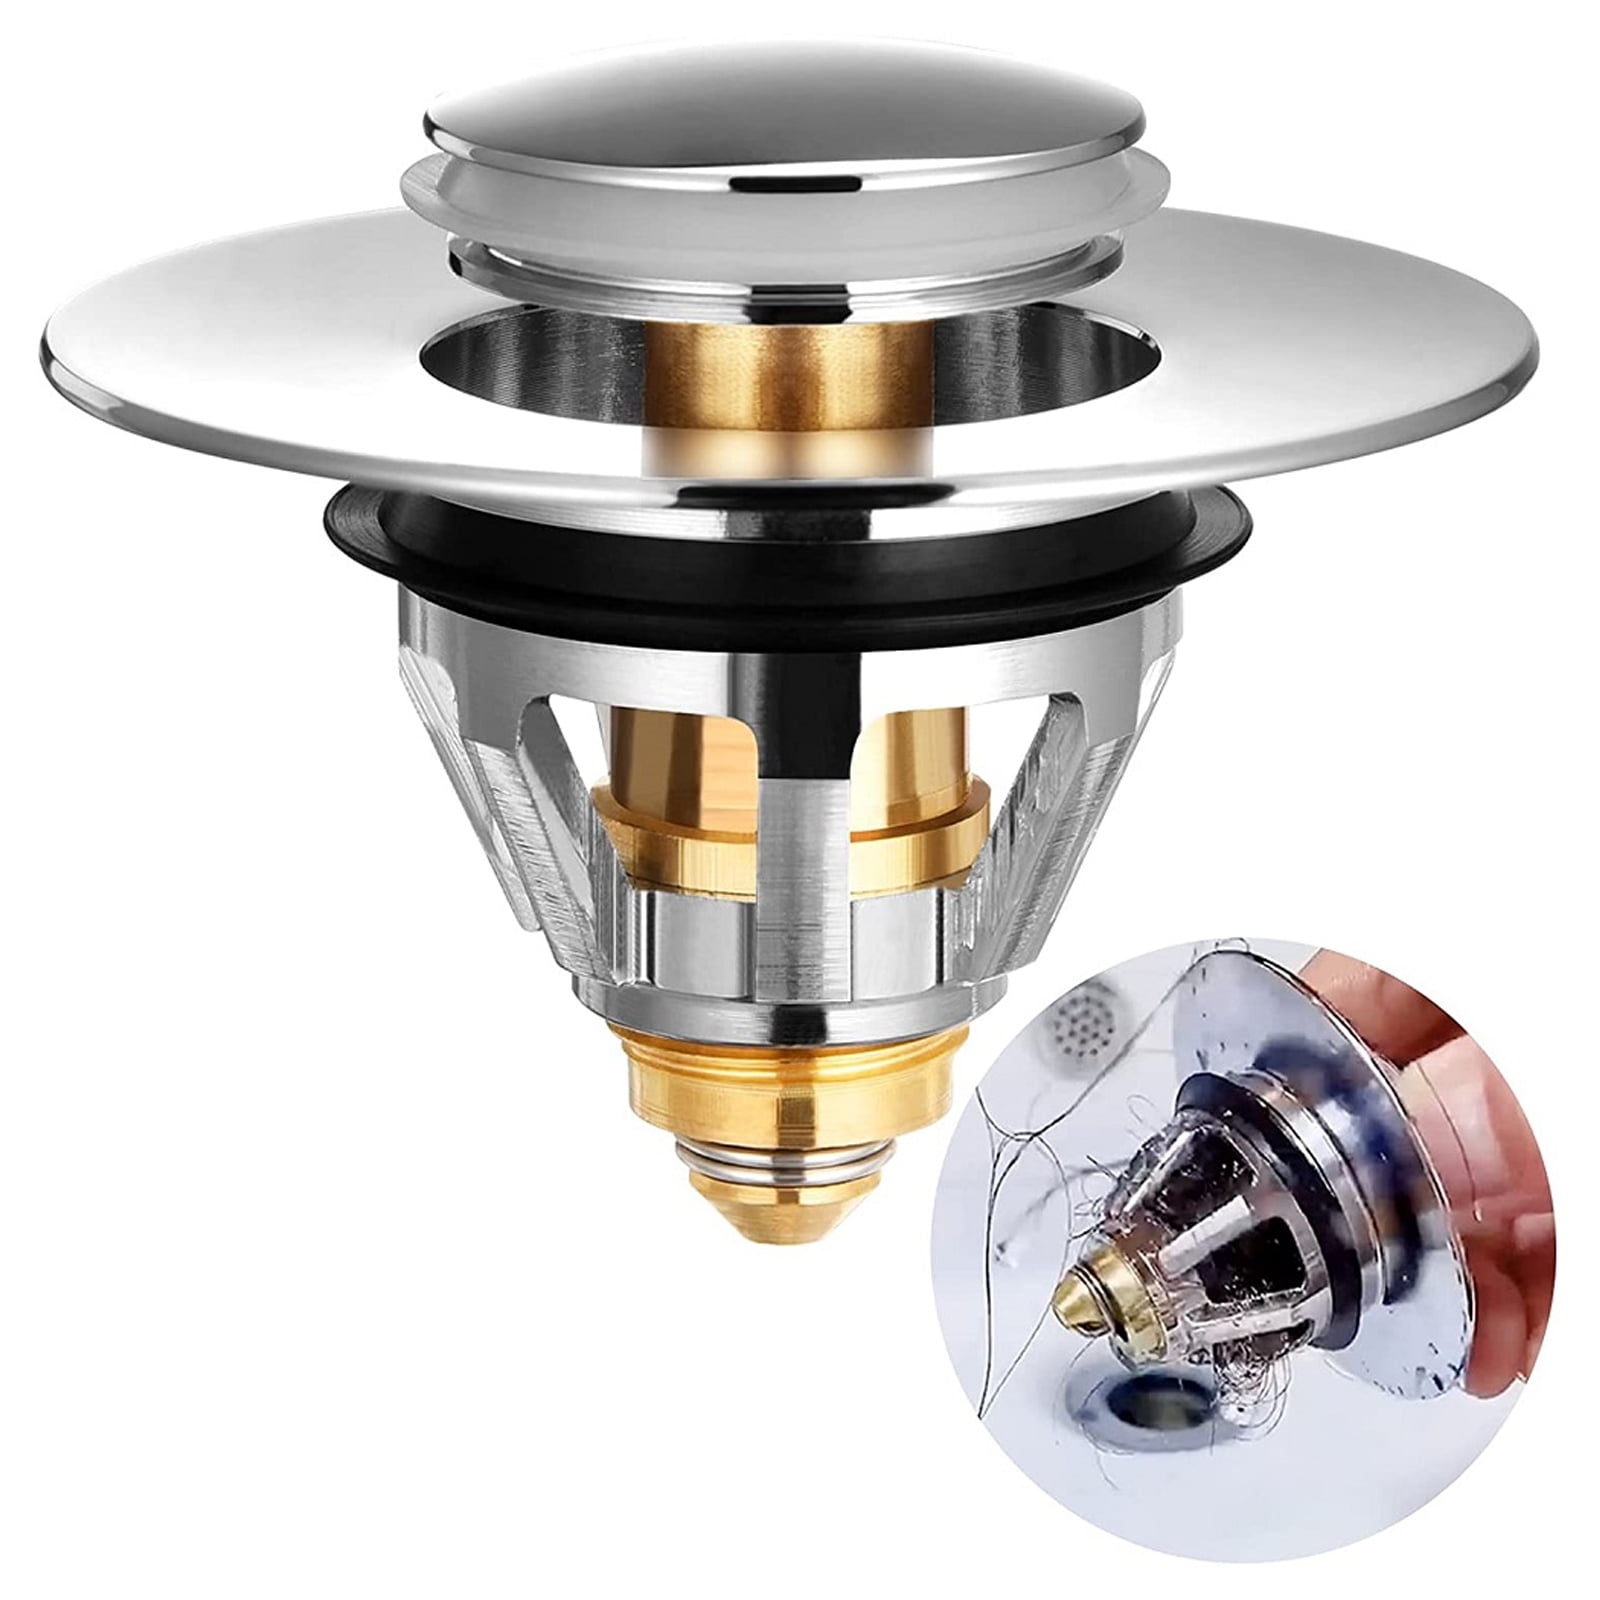 Lifeventure Universal Sink Plug Light easy to use Compact 